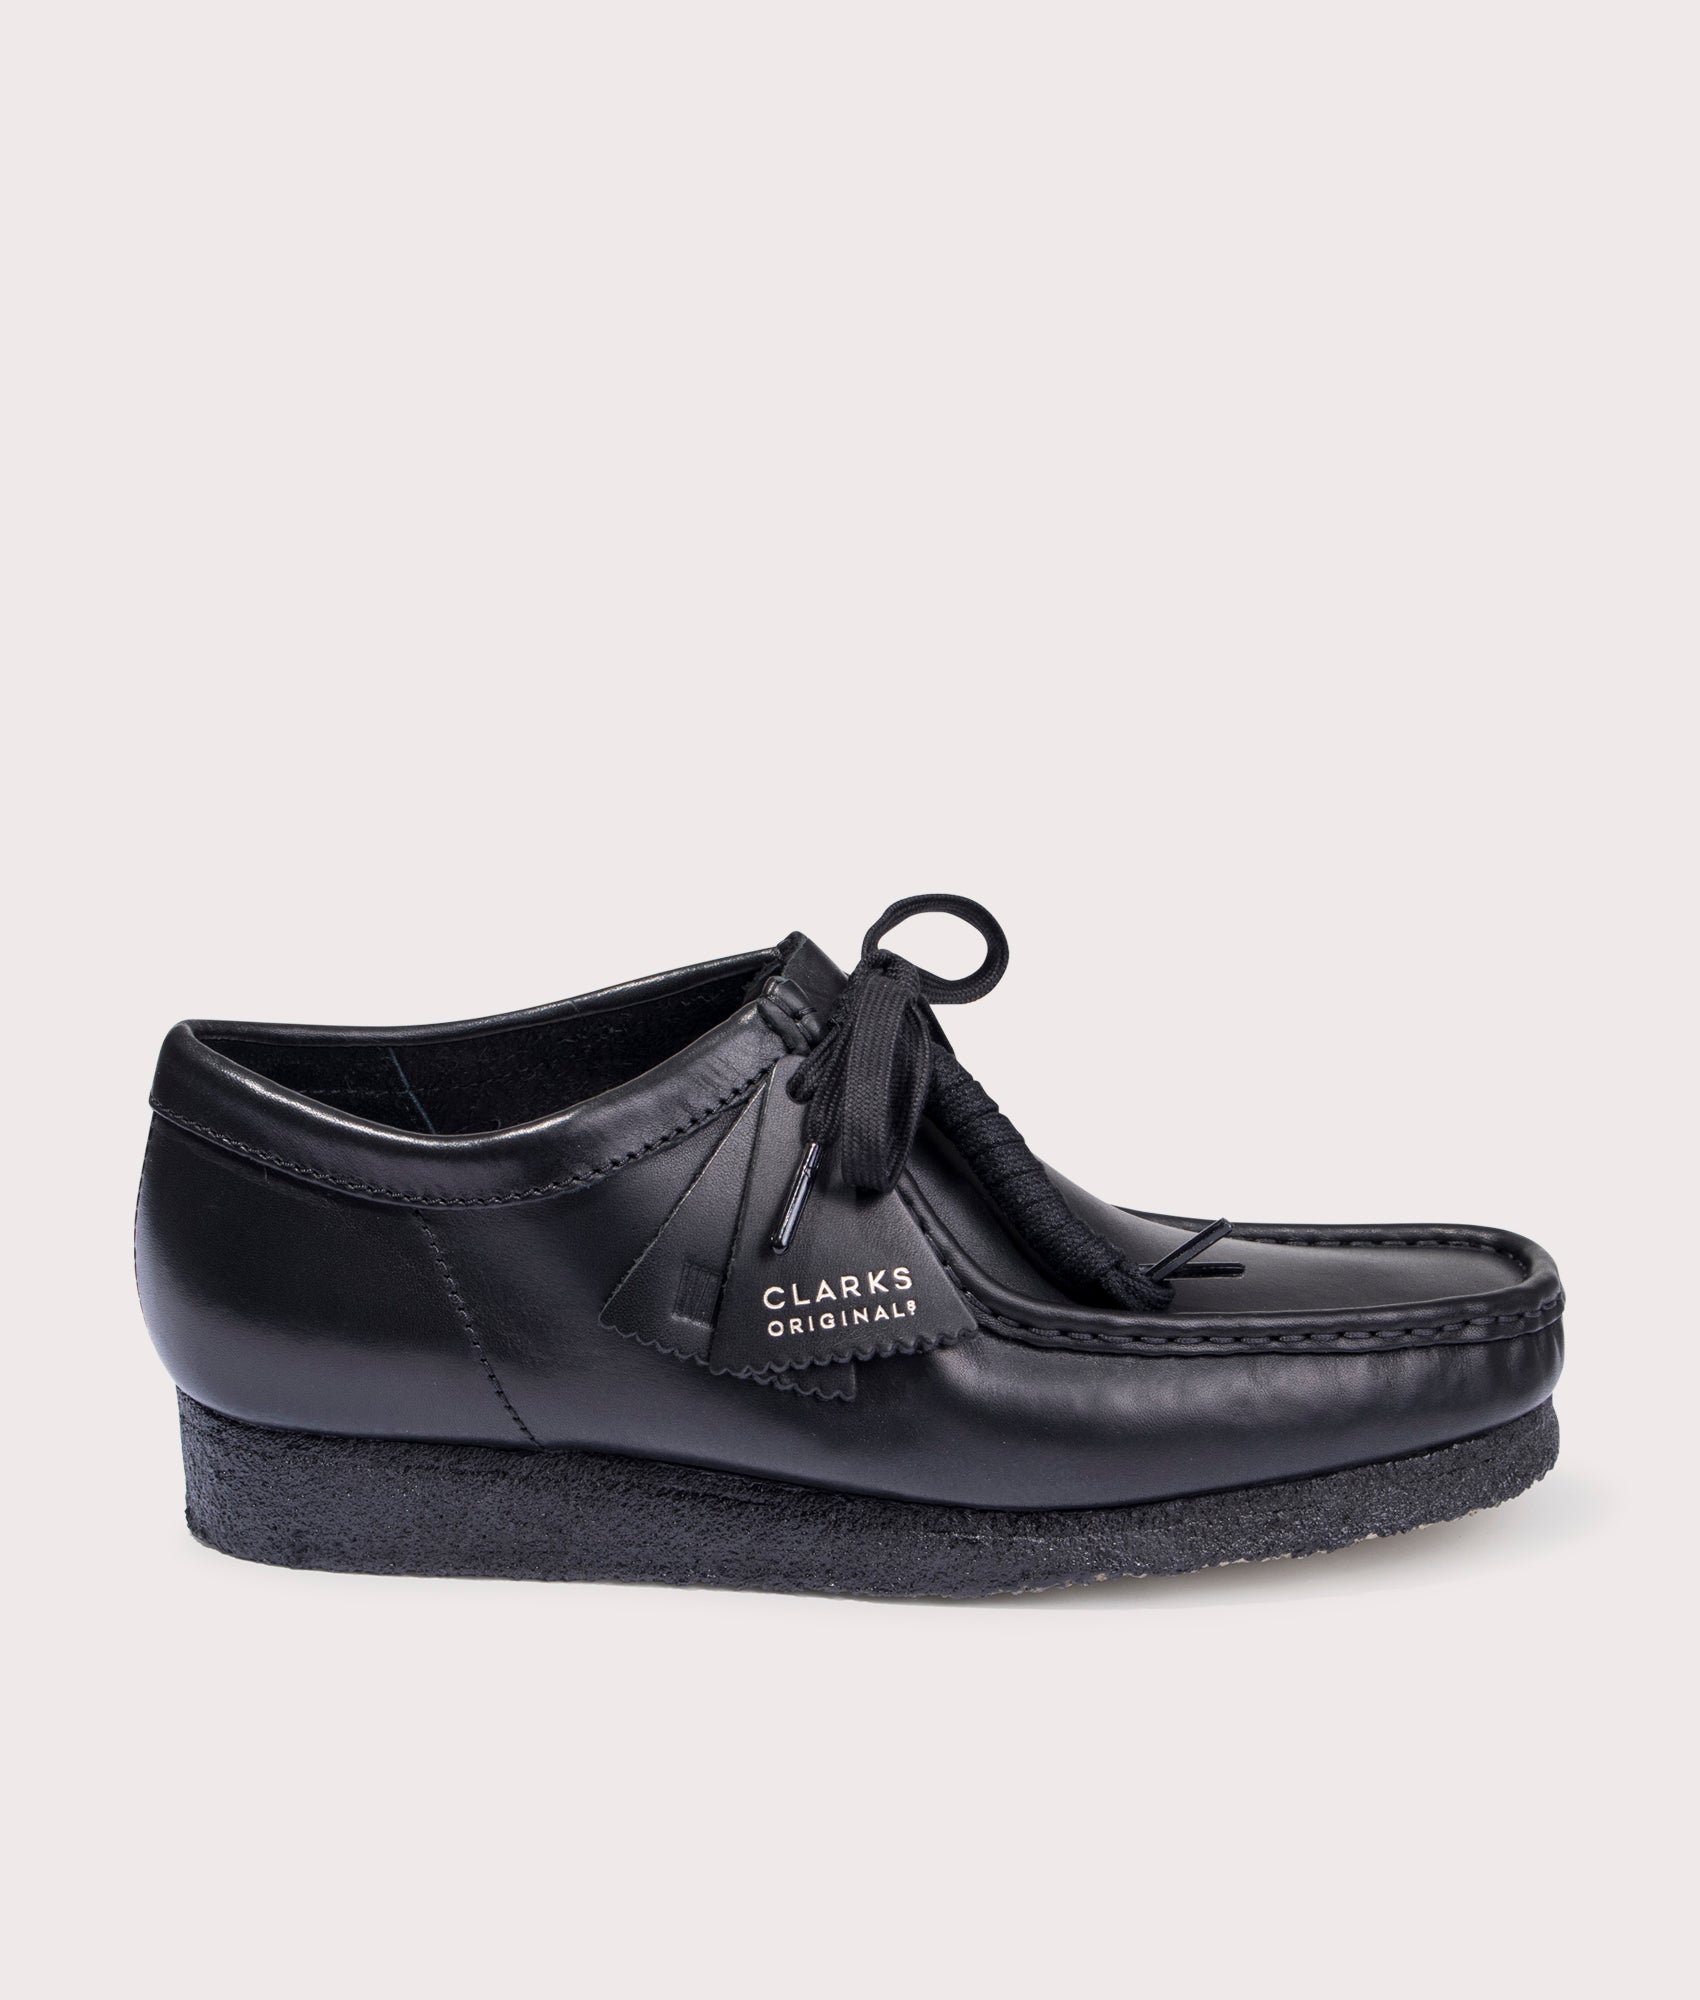 Clarks Originals Mens Wallabee Leather Shoes - Colour: Black Leather - Size: 9